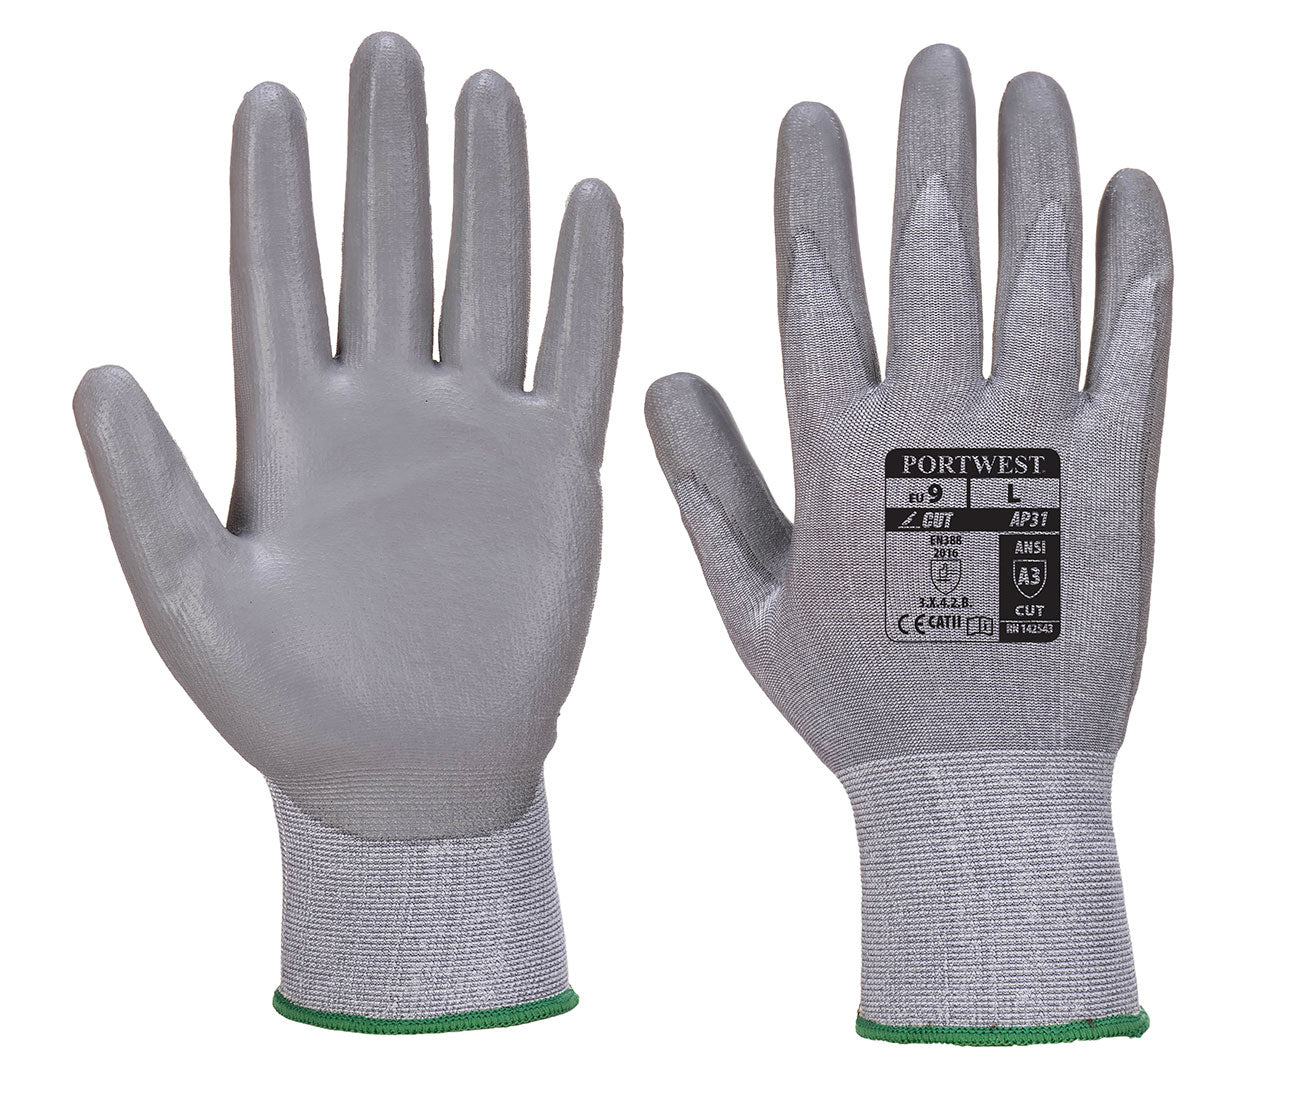 Portwest Senti Cut Lite Glove AP31 - New England Safety Supply